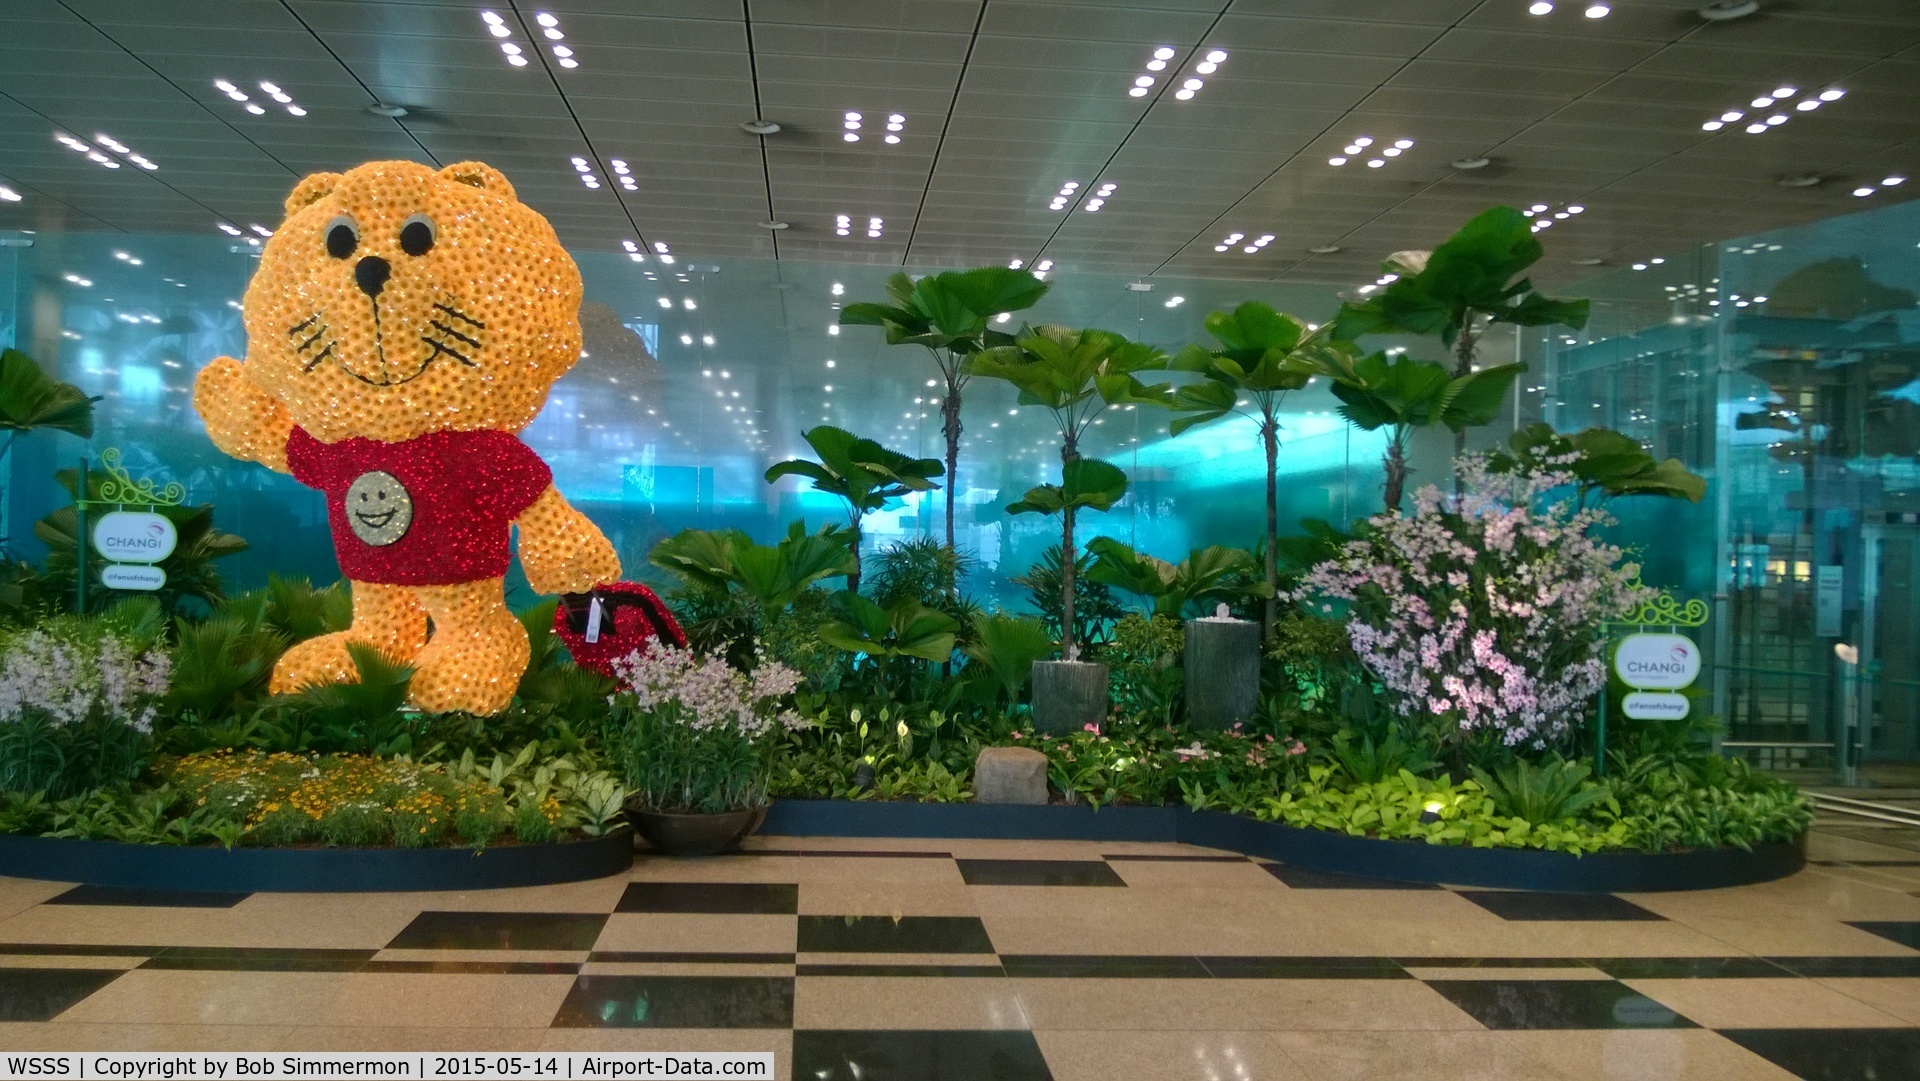 Singapore Changi Airport, Changi Singapore (WSSS) - Inside one of the world's most beautiful airports.